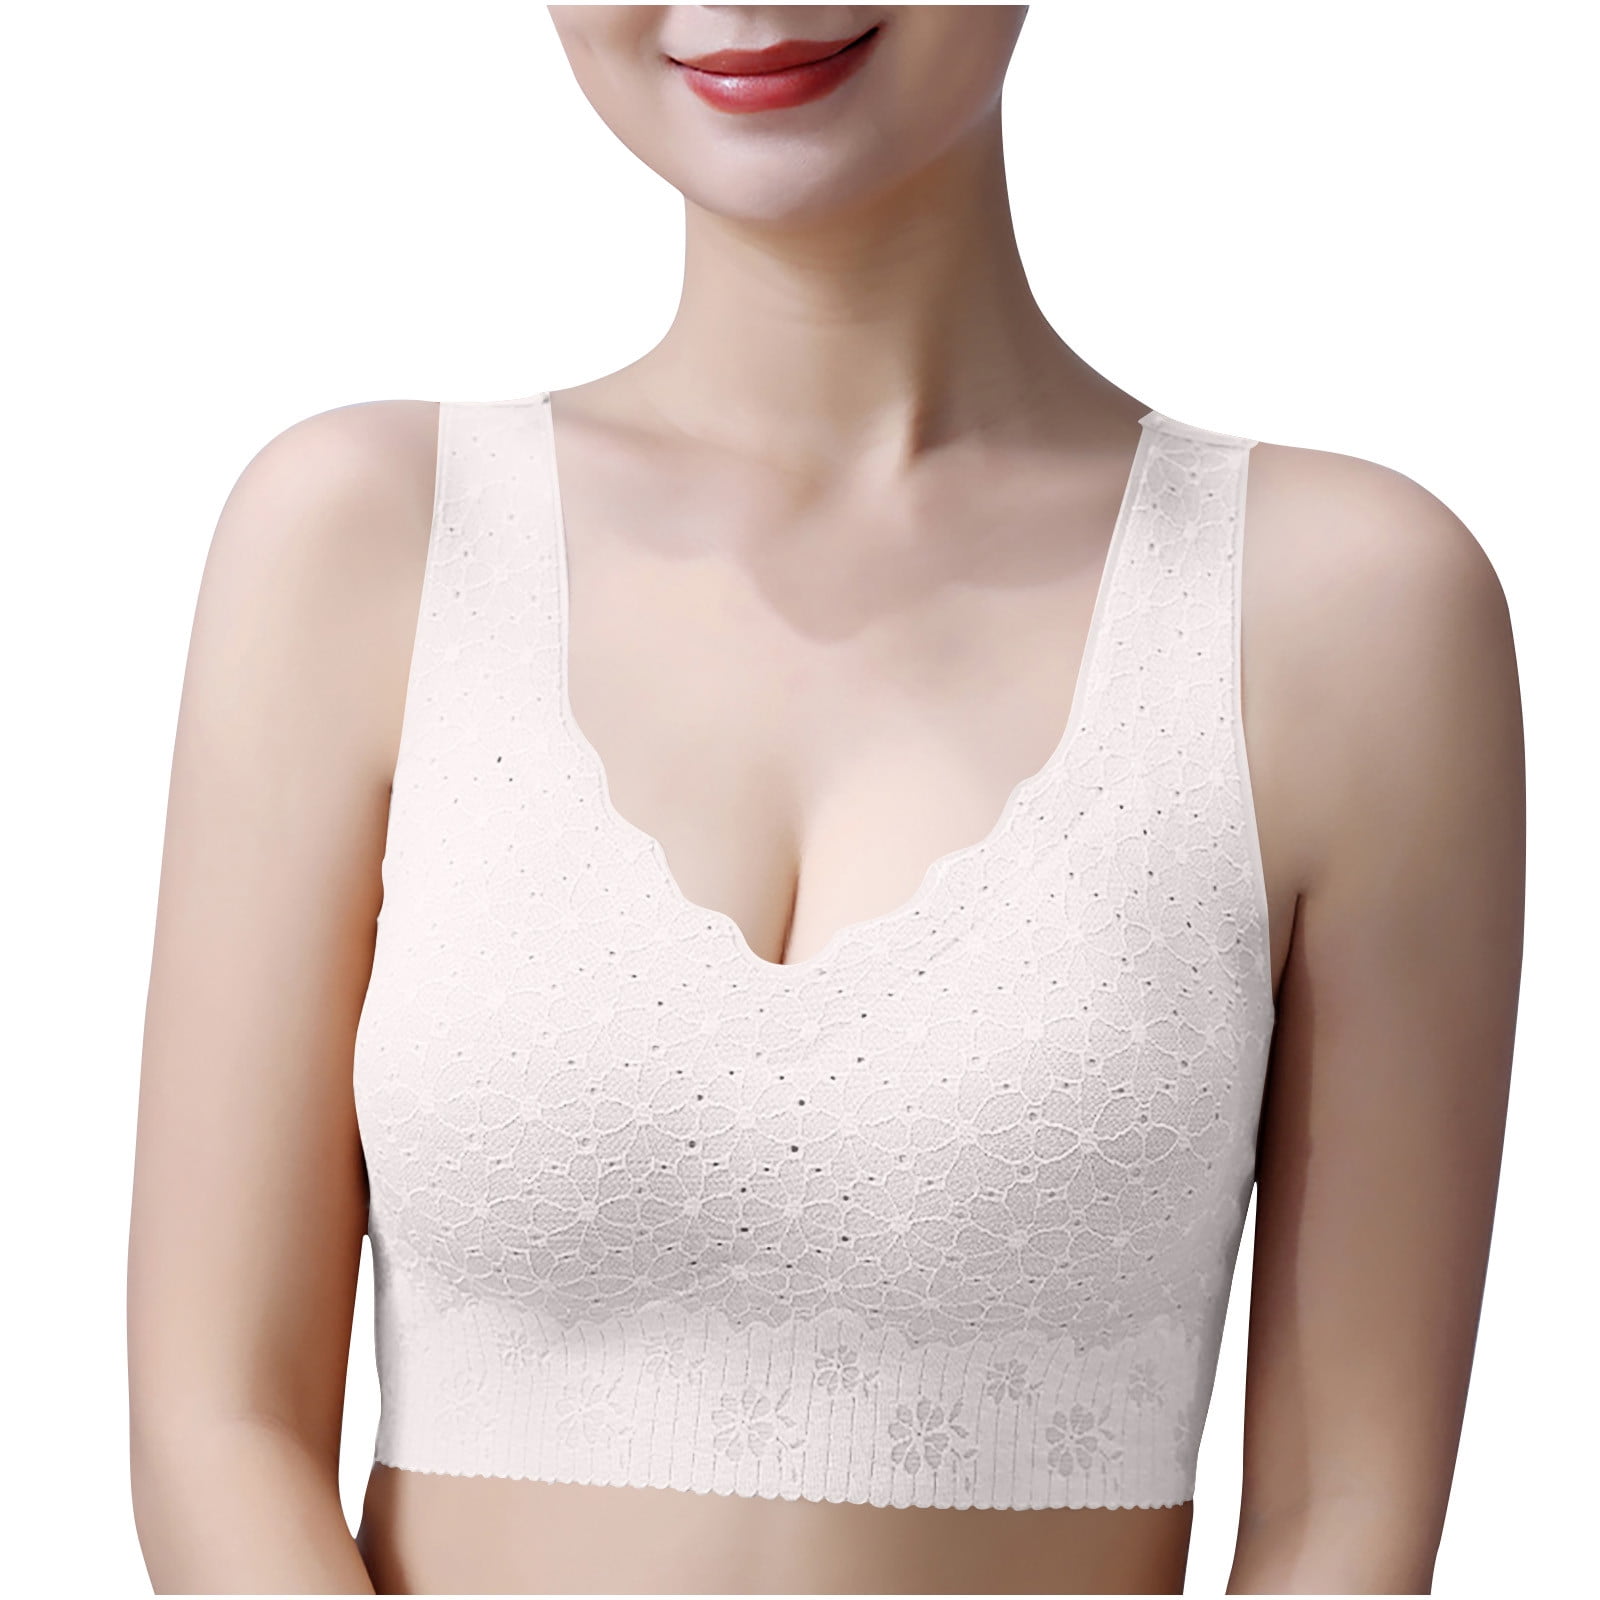 Buy Slr fashion non-pad bra set for women pack of 5 Online - Get